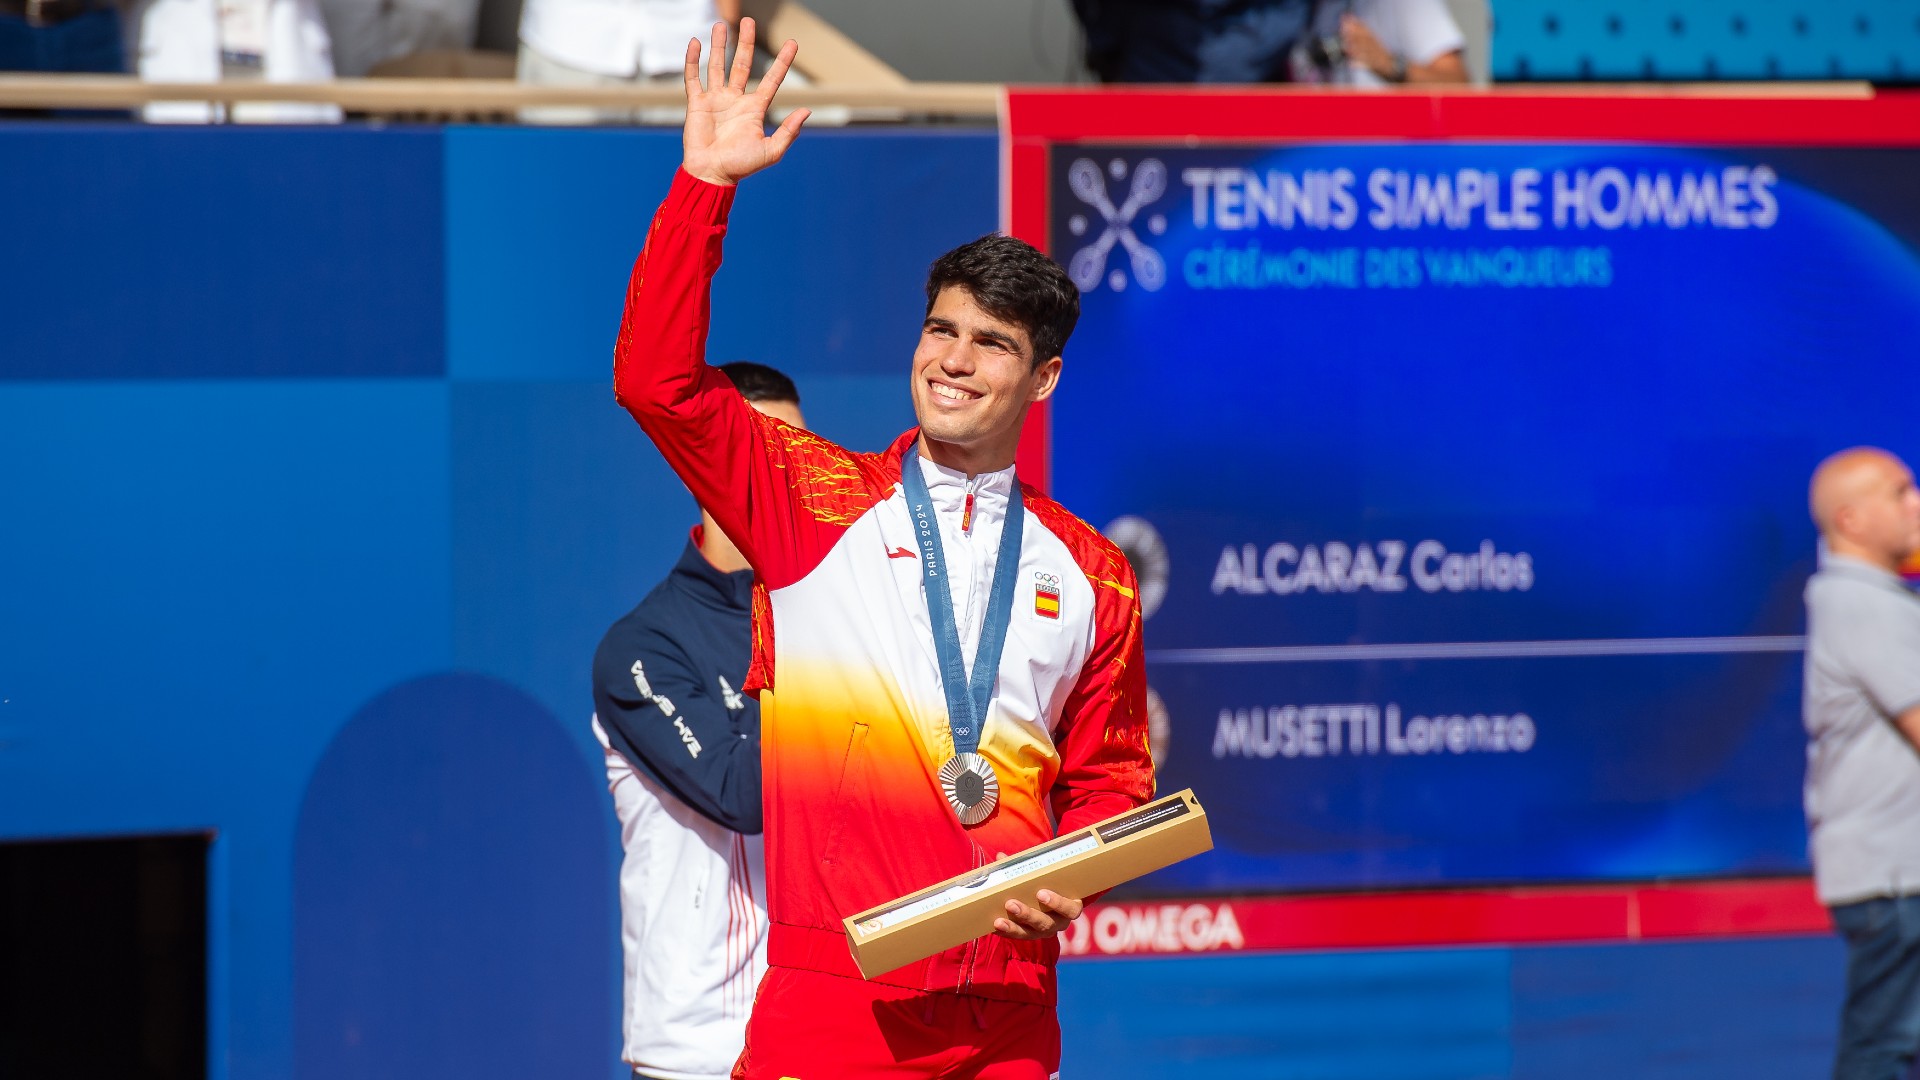 Alcaraz 'felt pressure' in Olympics